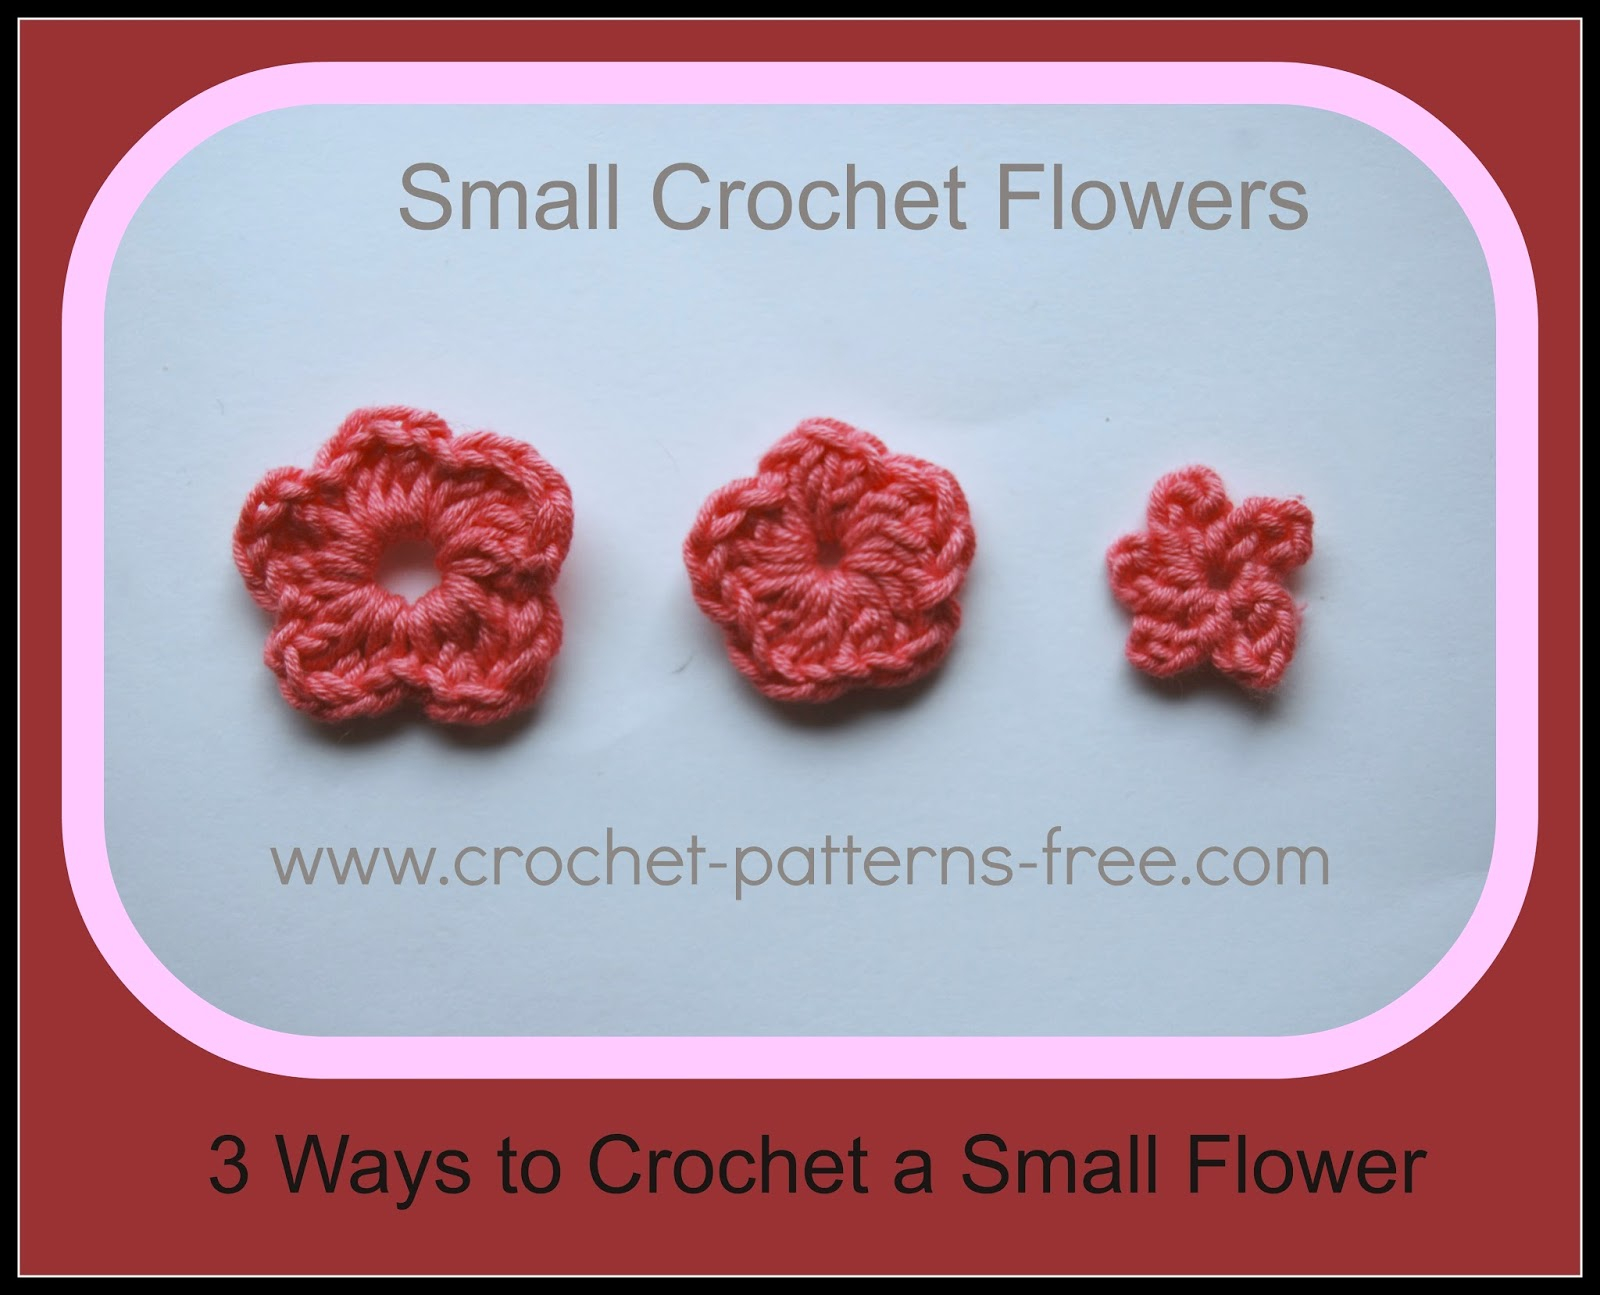 Crochet Flowers Pattern Free Crochet Patterns And Designs Lisaauch Small Crochet Flower